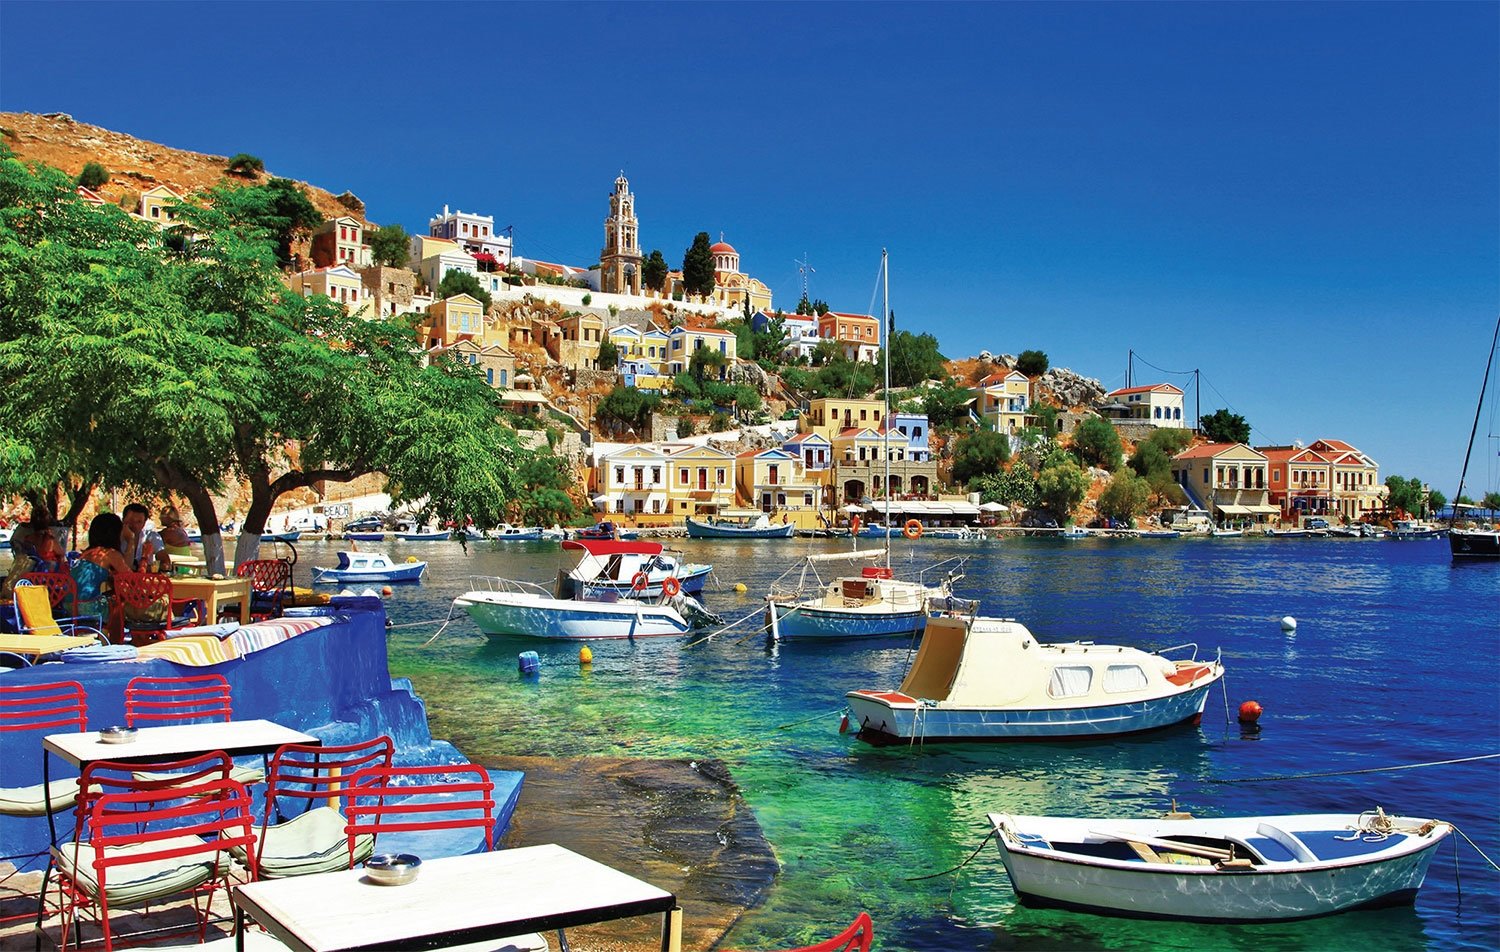 Küçük ve sevimli bir Yunan adası Simi